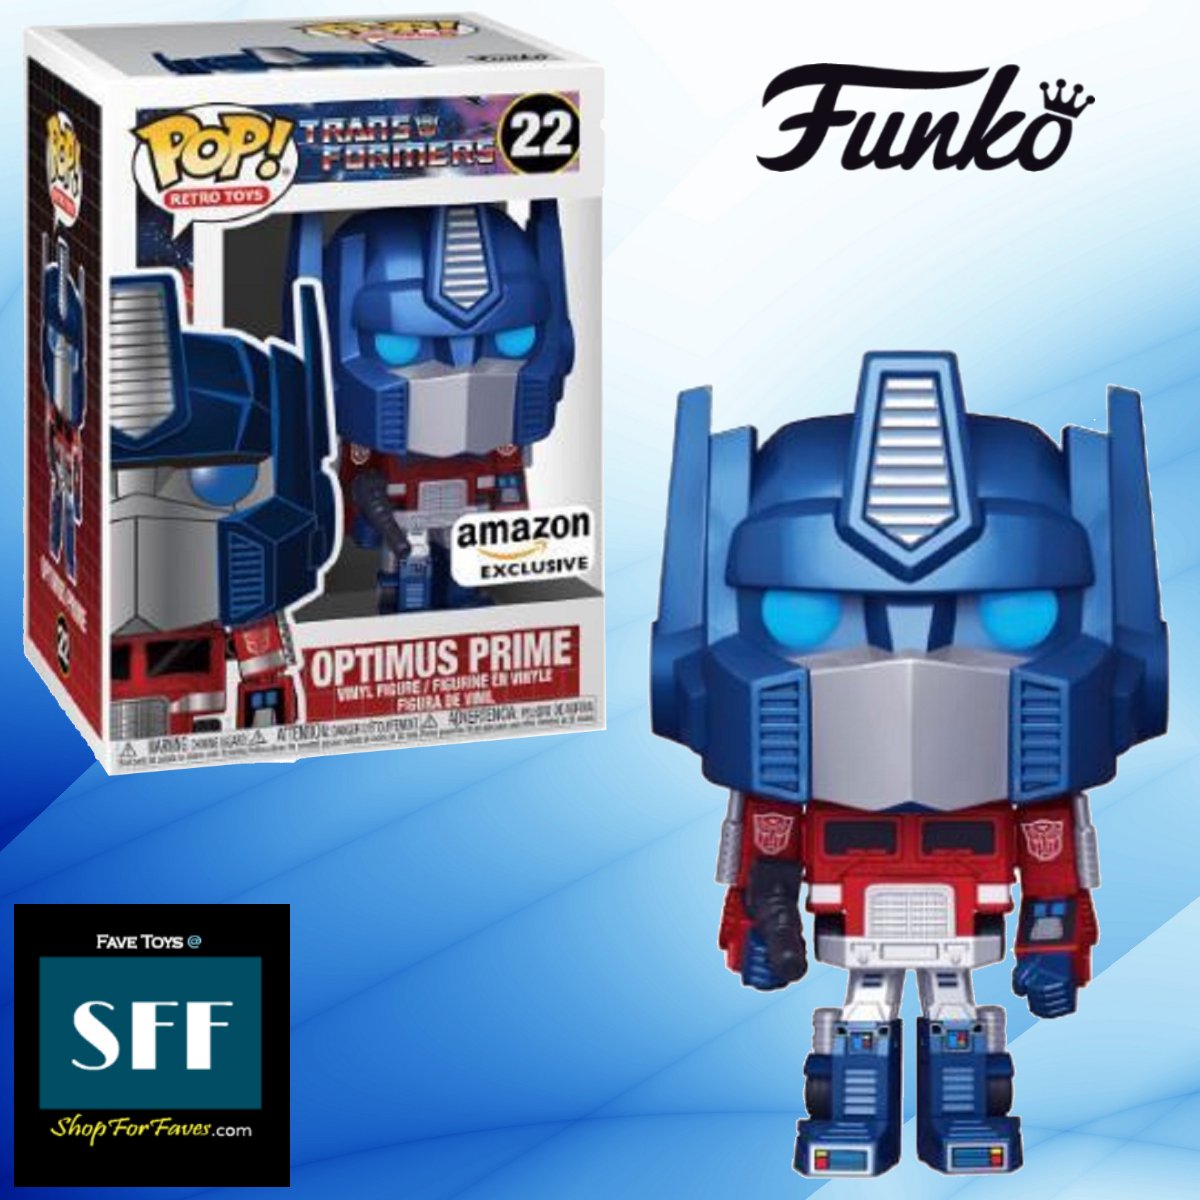 Retro Toys Transformers Metallic Optimus Prime Exclusive Funko Pop